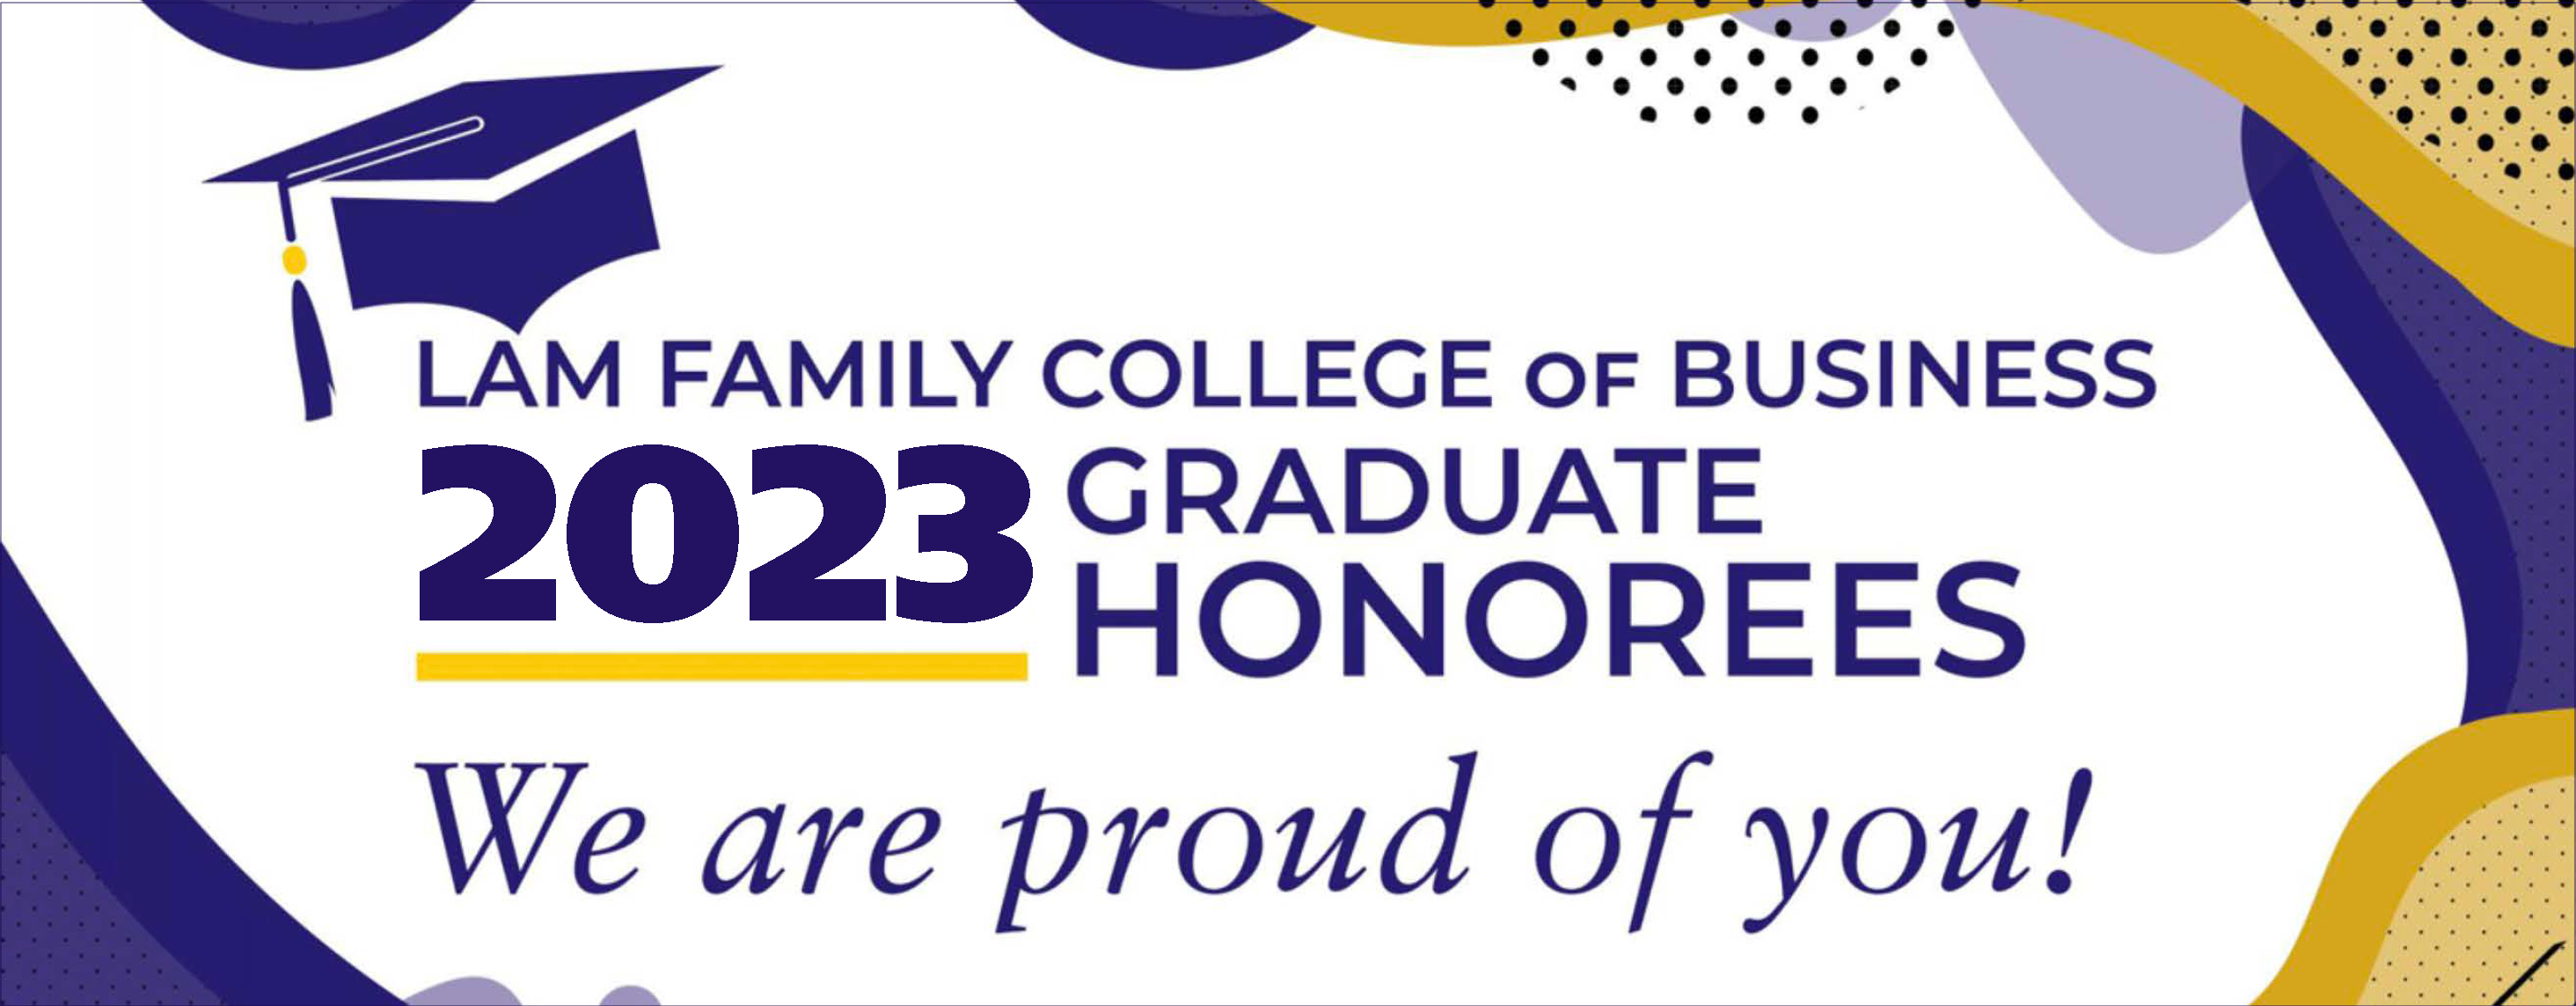 Graduate Honorees 2023